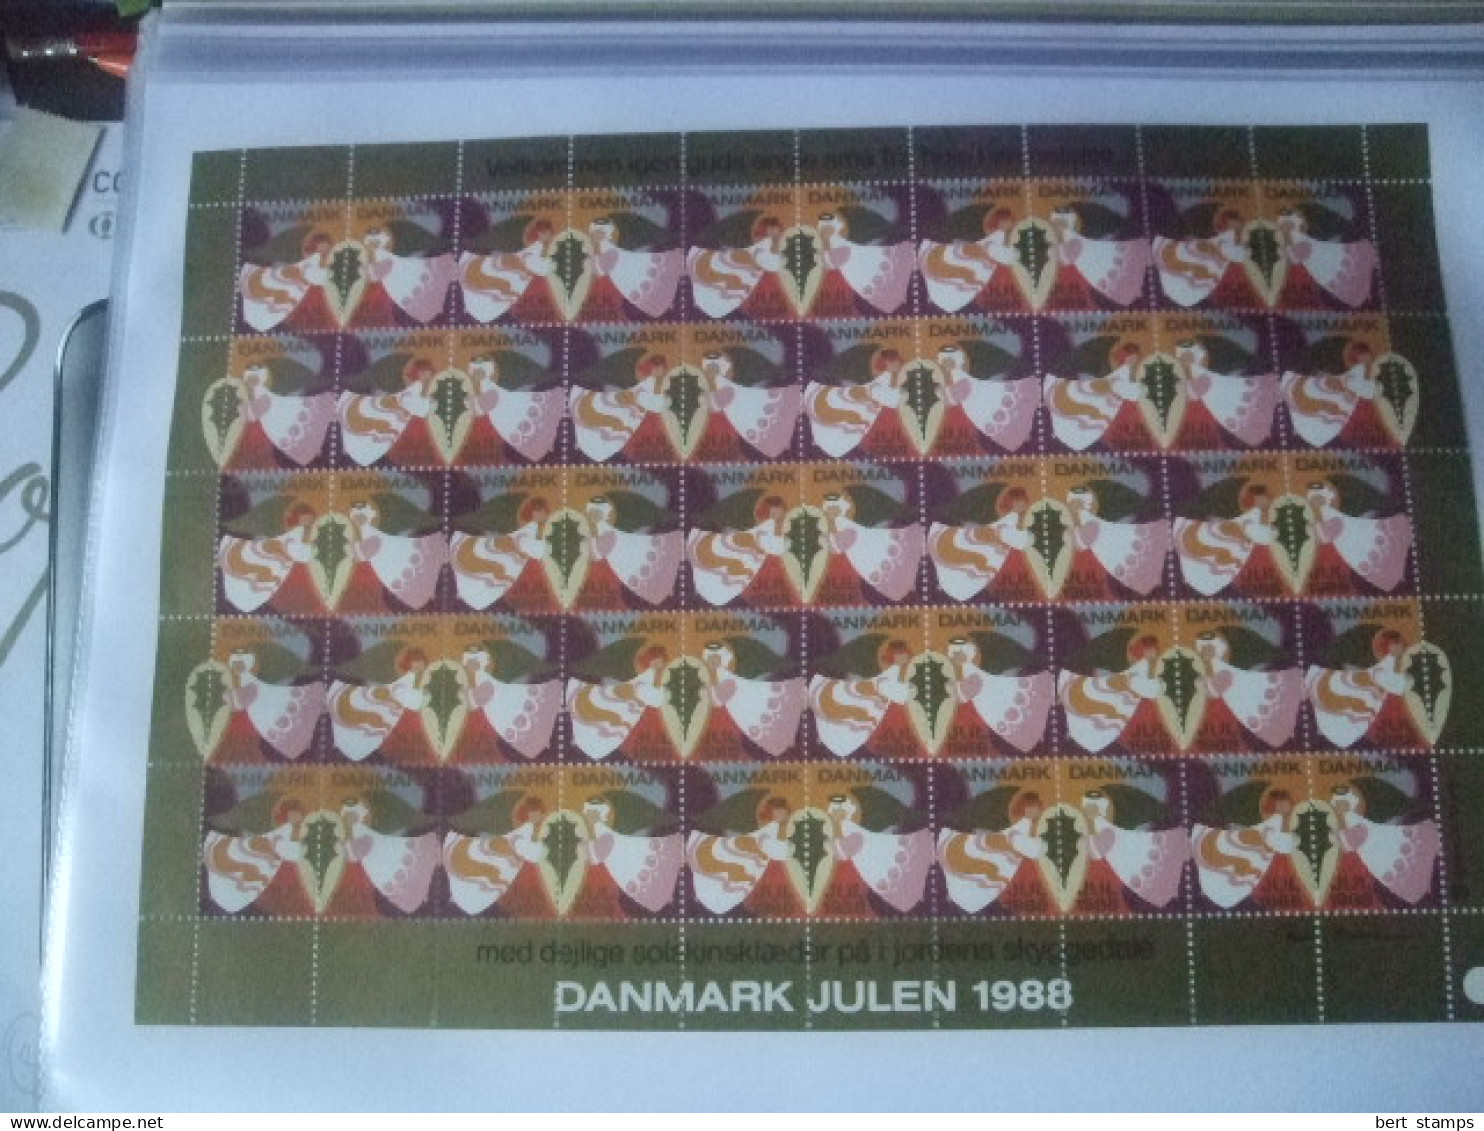 Denmark, Denemarken, Jul marken nice collection from compleet sheets from 1953 (39x)